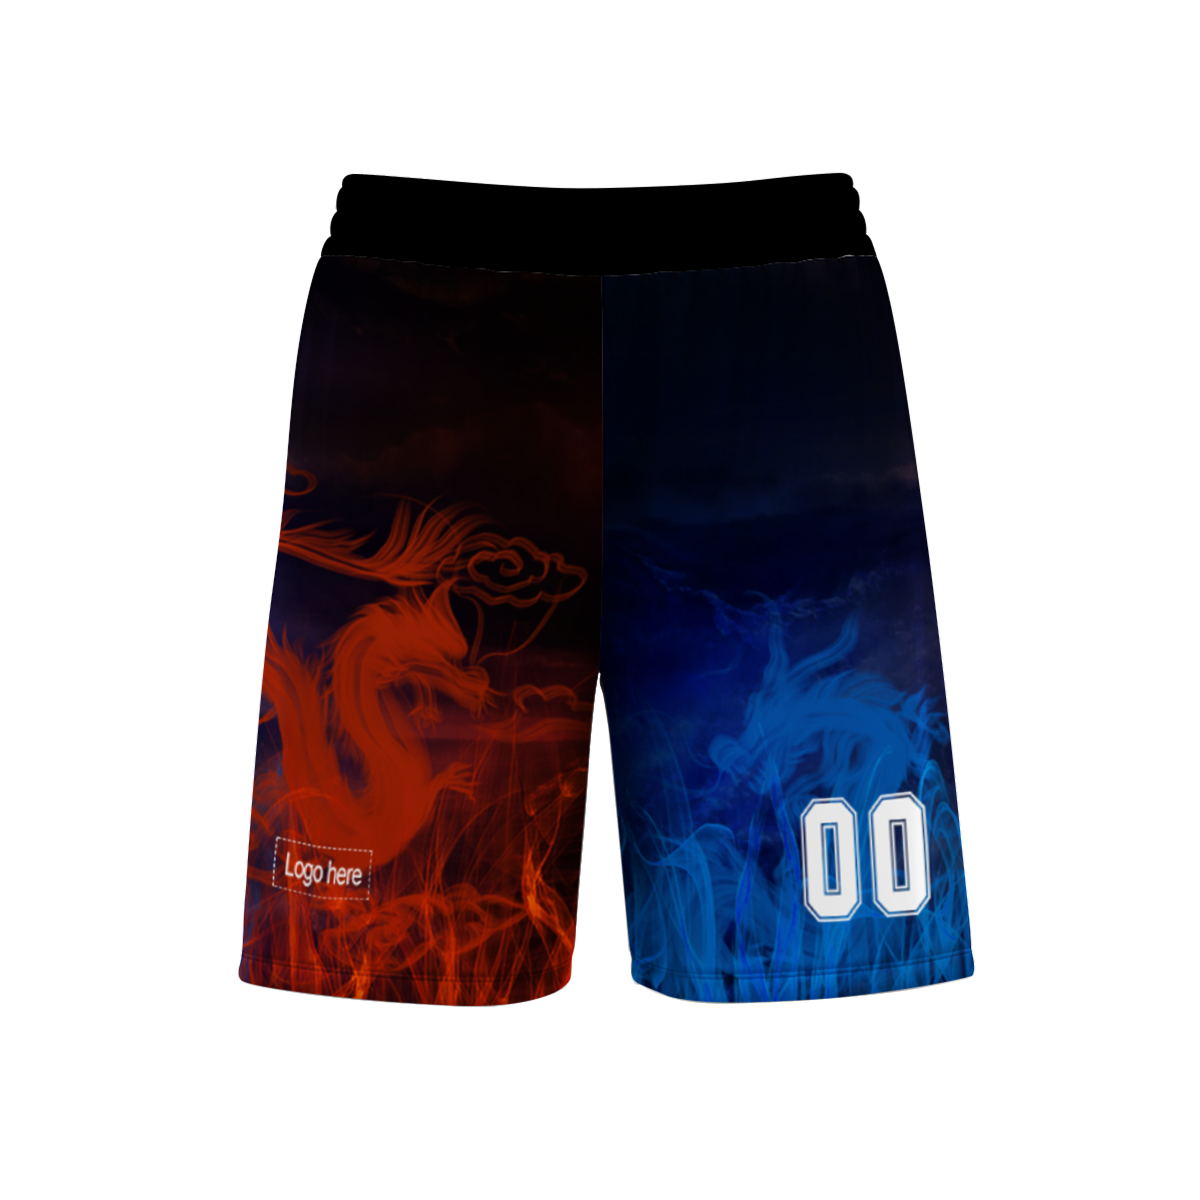 custom-jersey-full-sublimated-printing-sports-wear-basketball-uniform-design-basketball-jersey-at-cj-pod-7